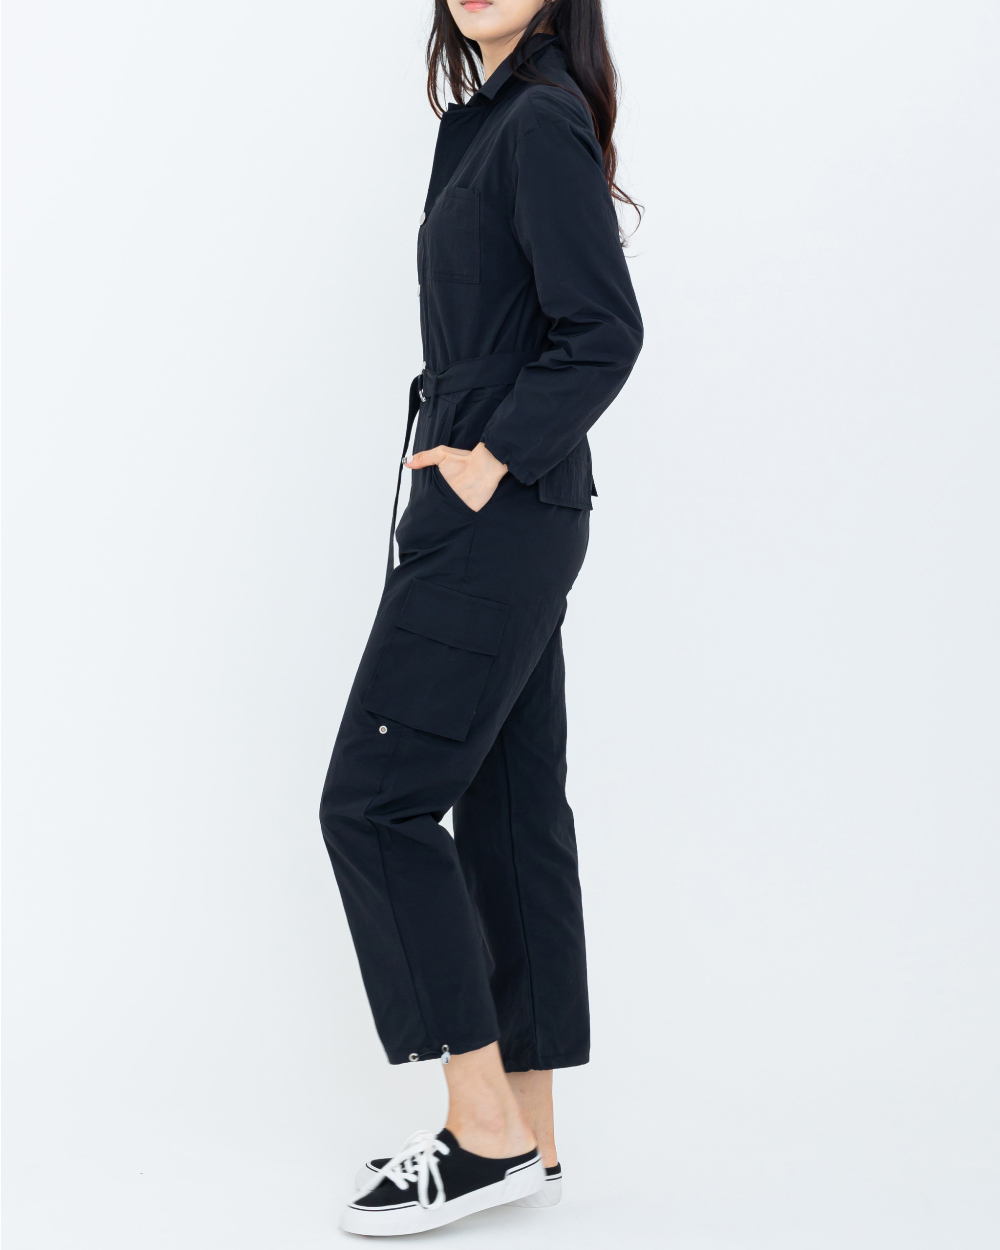 suspenders skirt/pants model image-S1L30